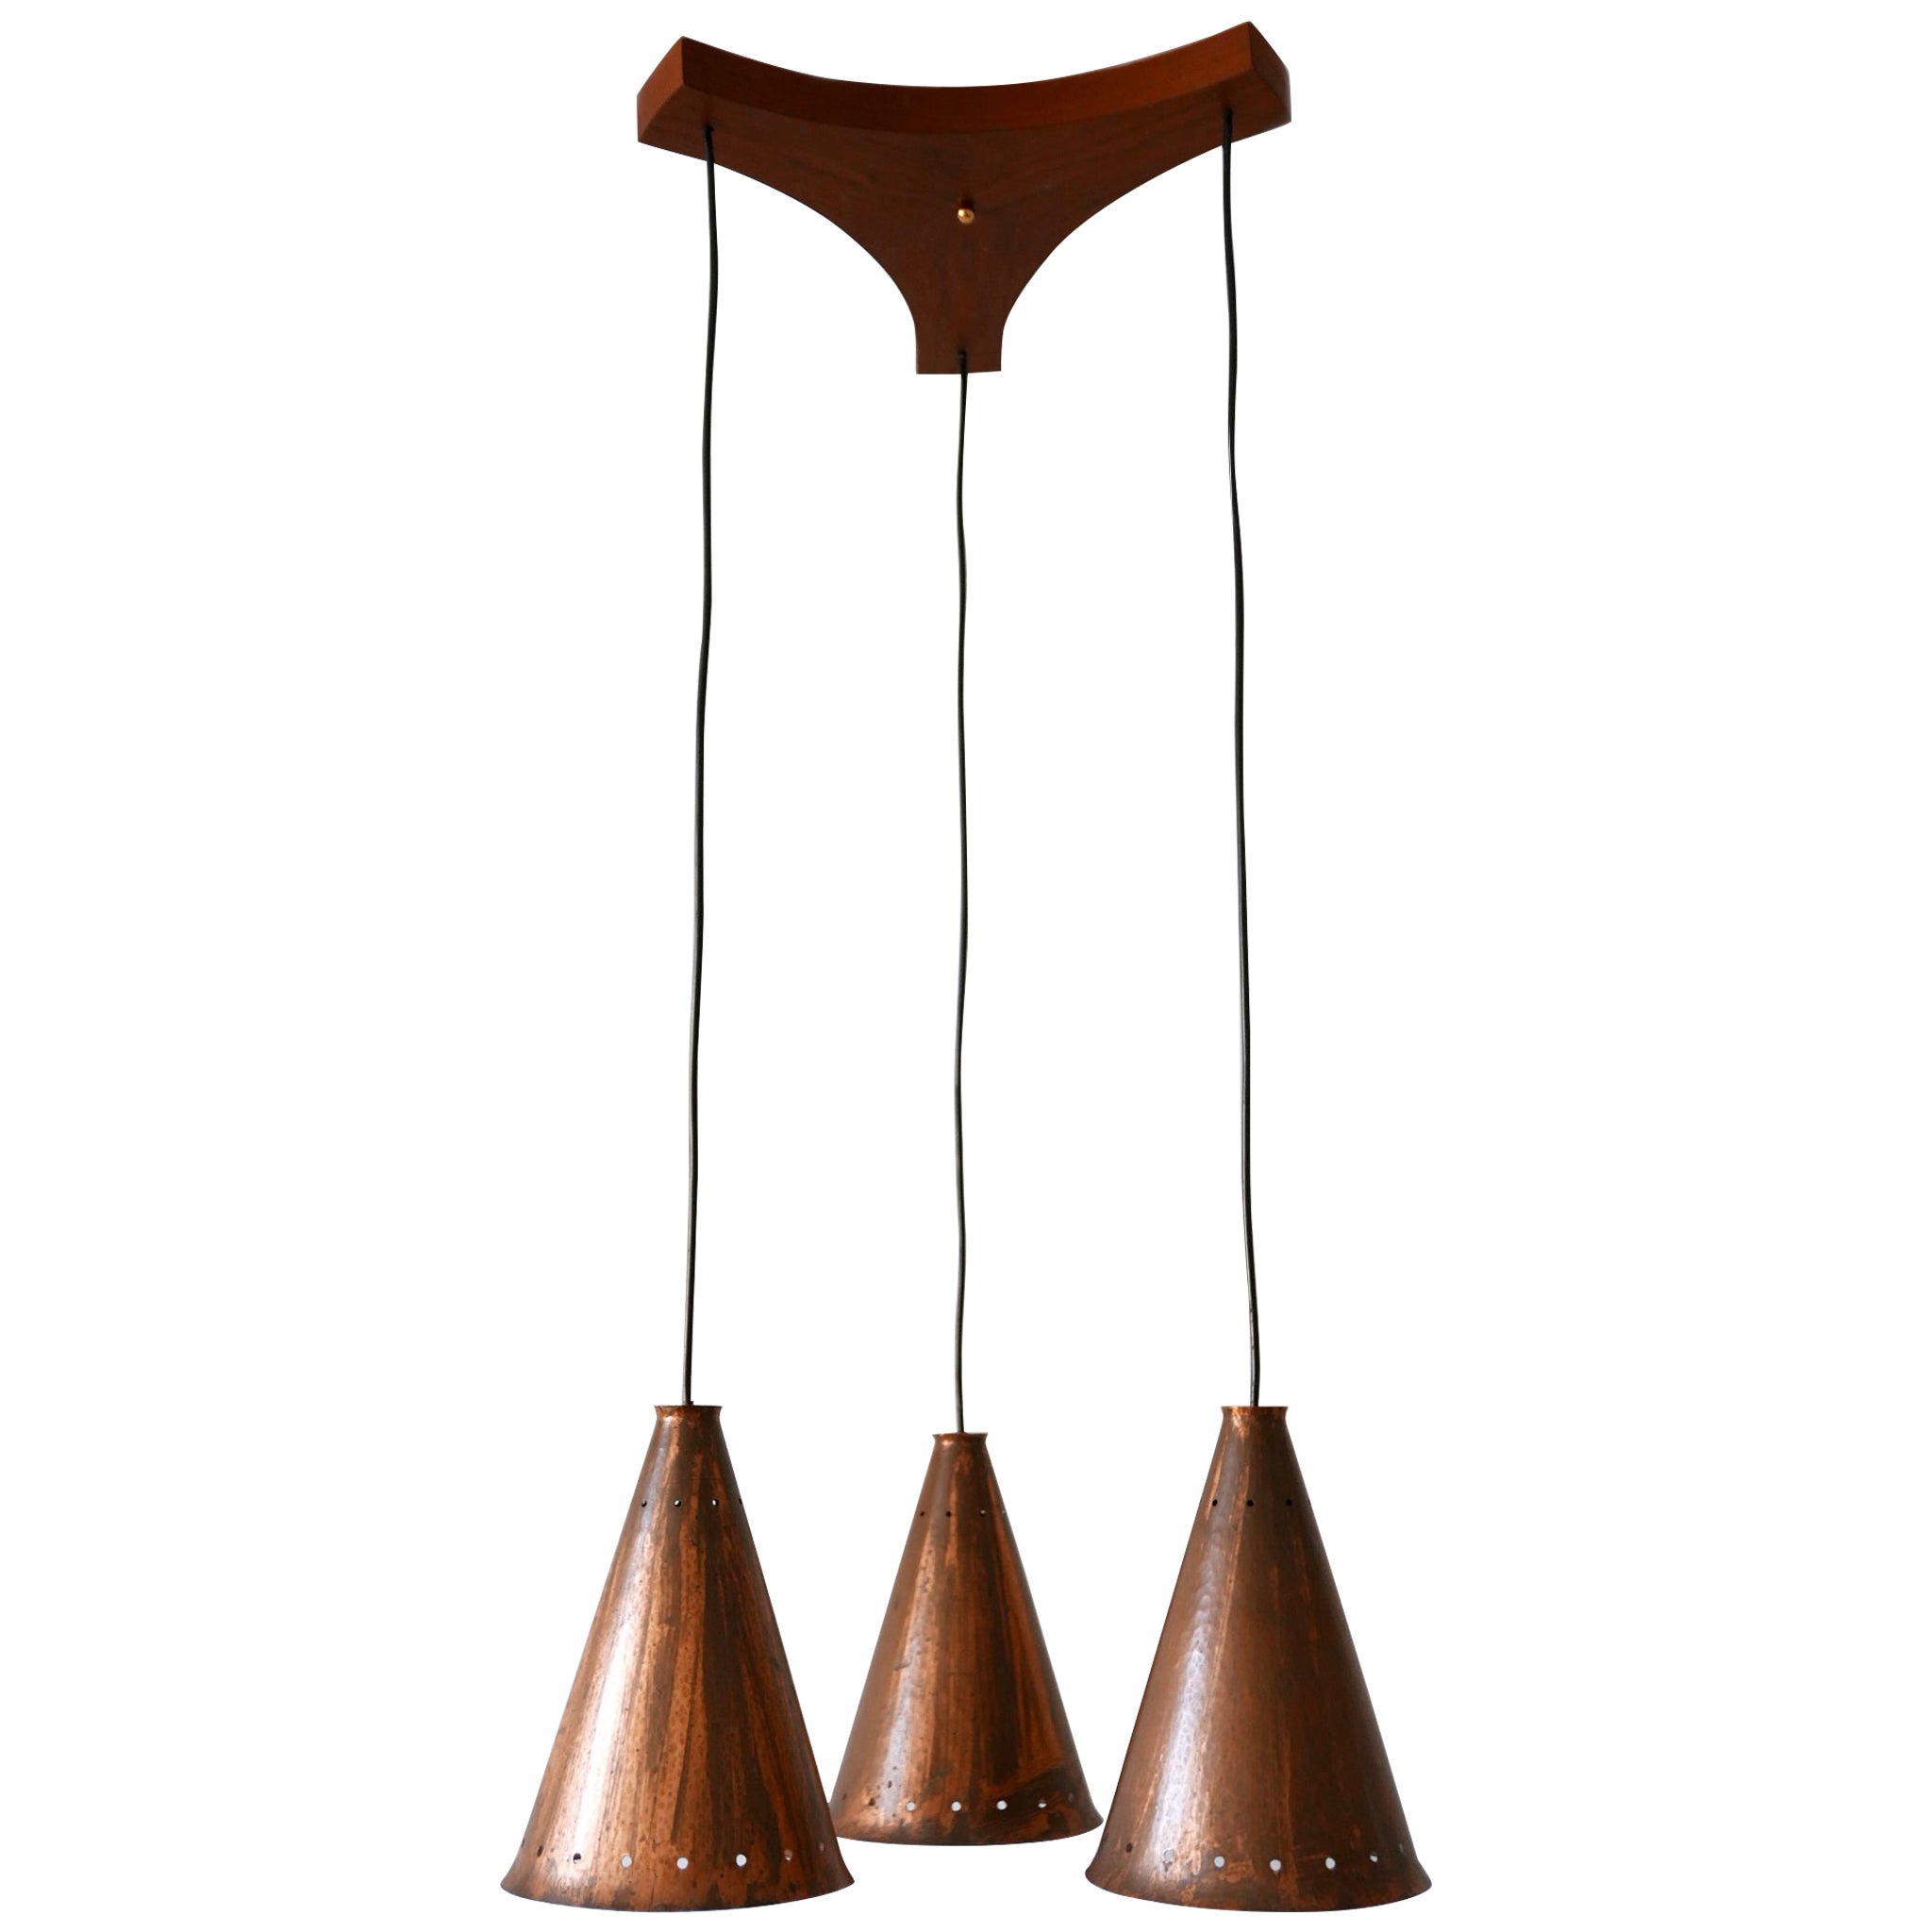 Exceptional & Large Mid-Century Modern Copper Pendant Lamp Scandinavia, 1950s